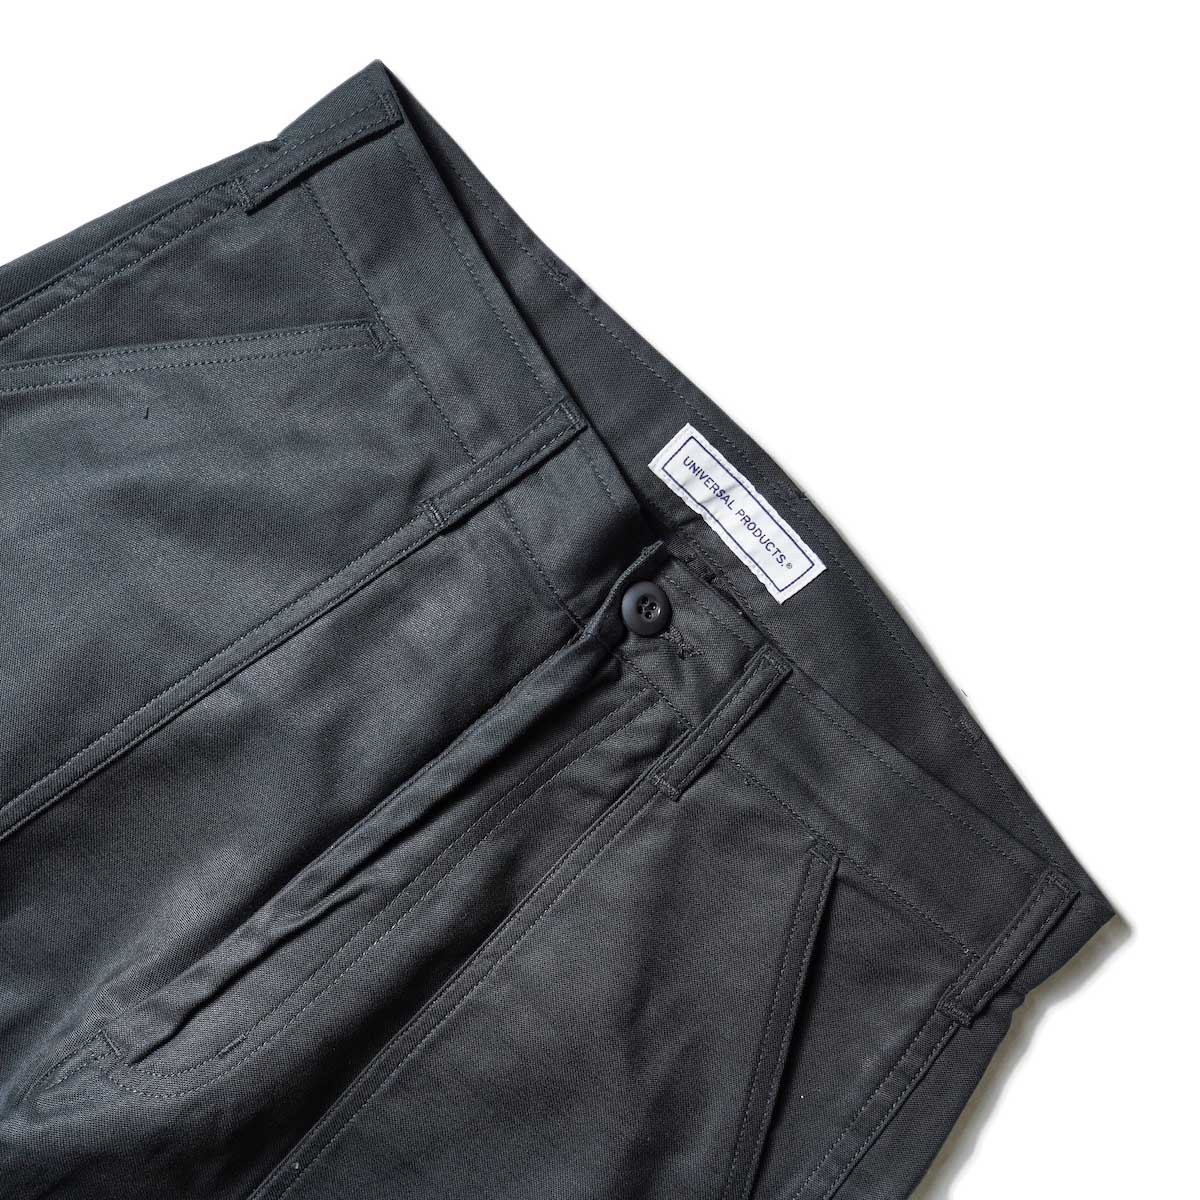 UNIVERSAL PRODUCTS / Gung Ho 1tuck Baker Pants (Black)ウエスト